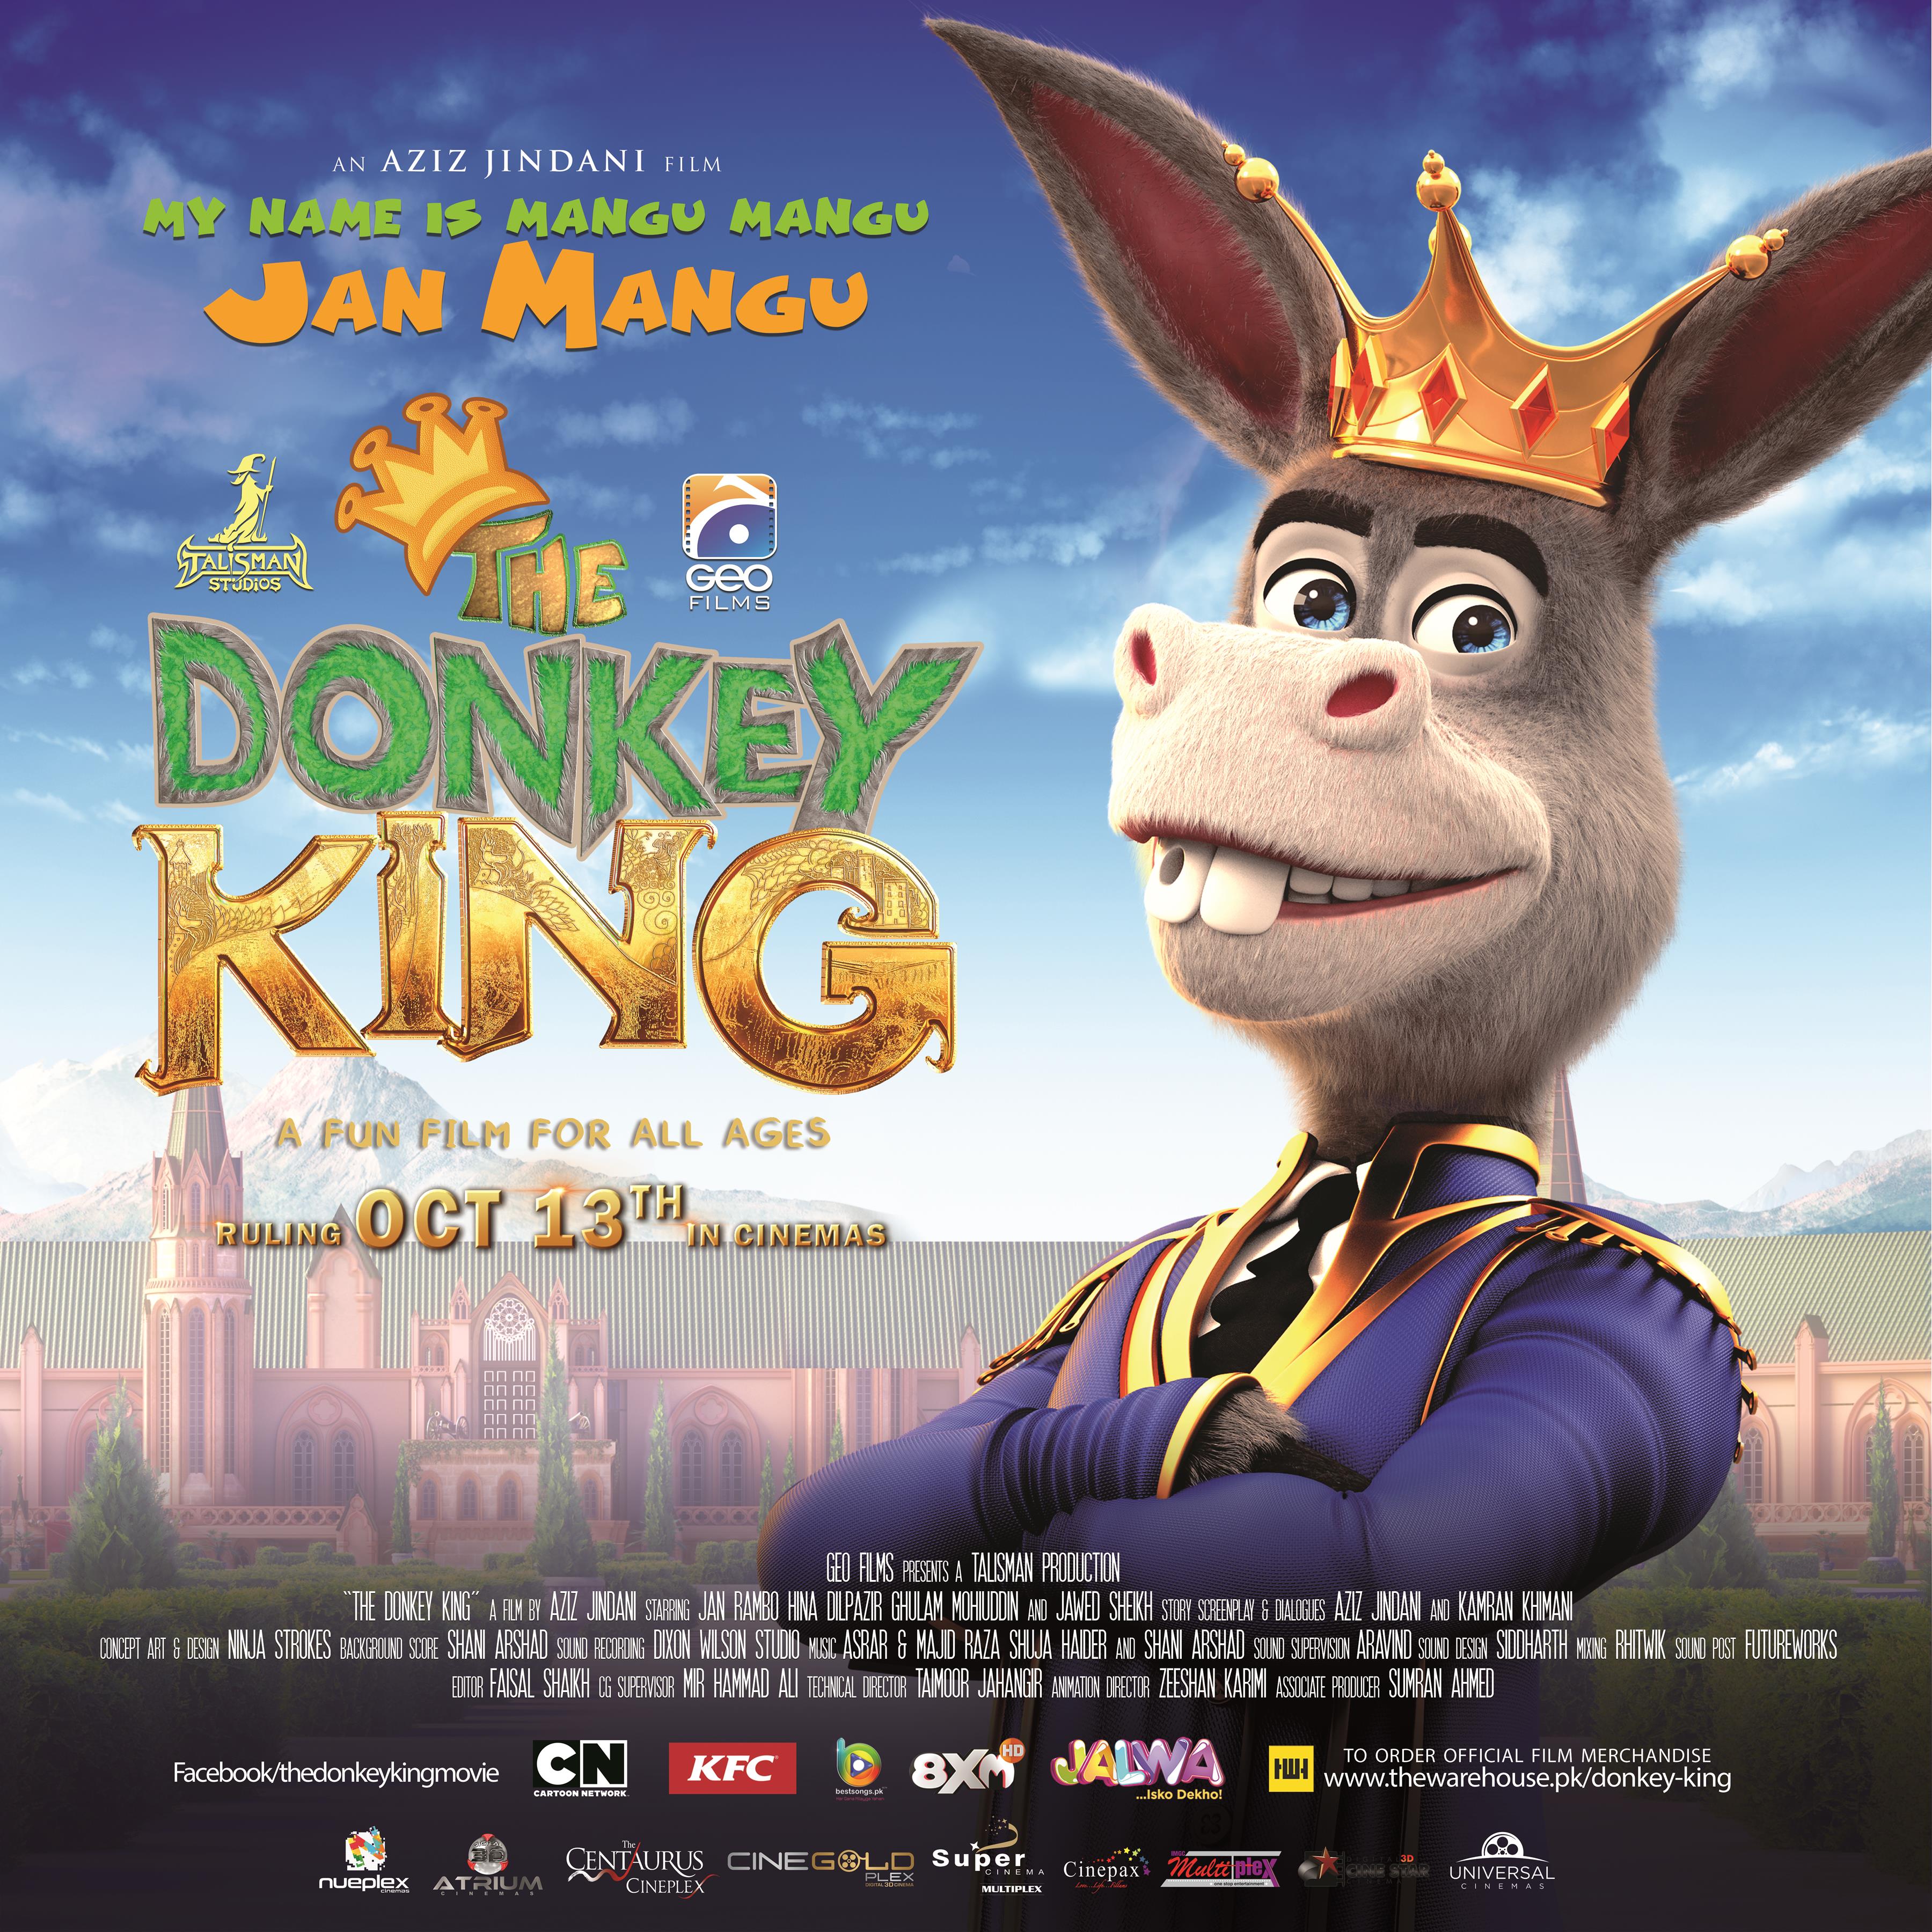 Donkey King Crosses 10 Crore Mark